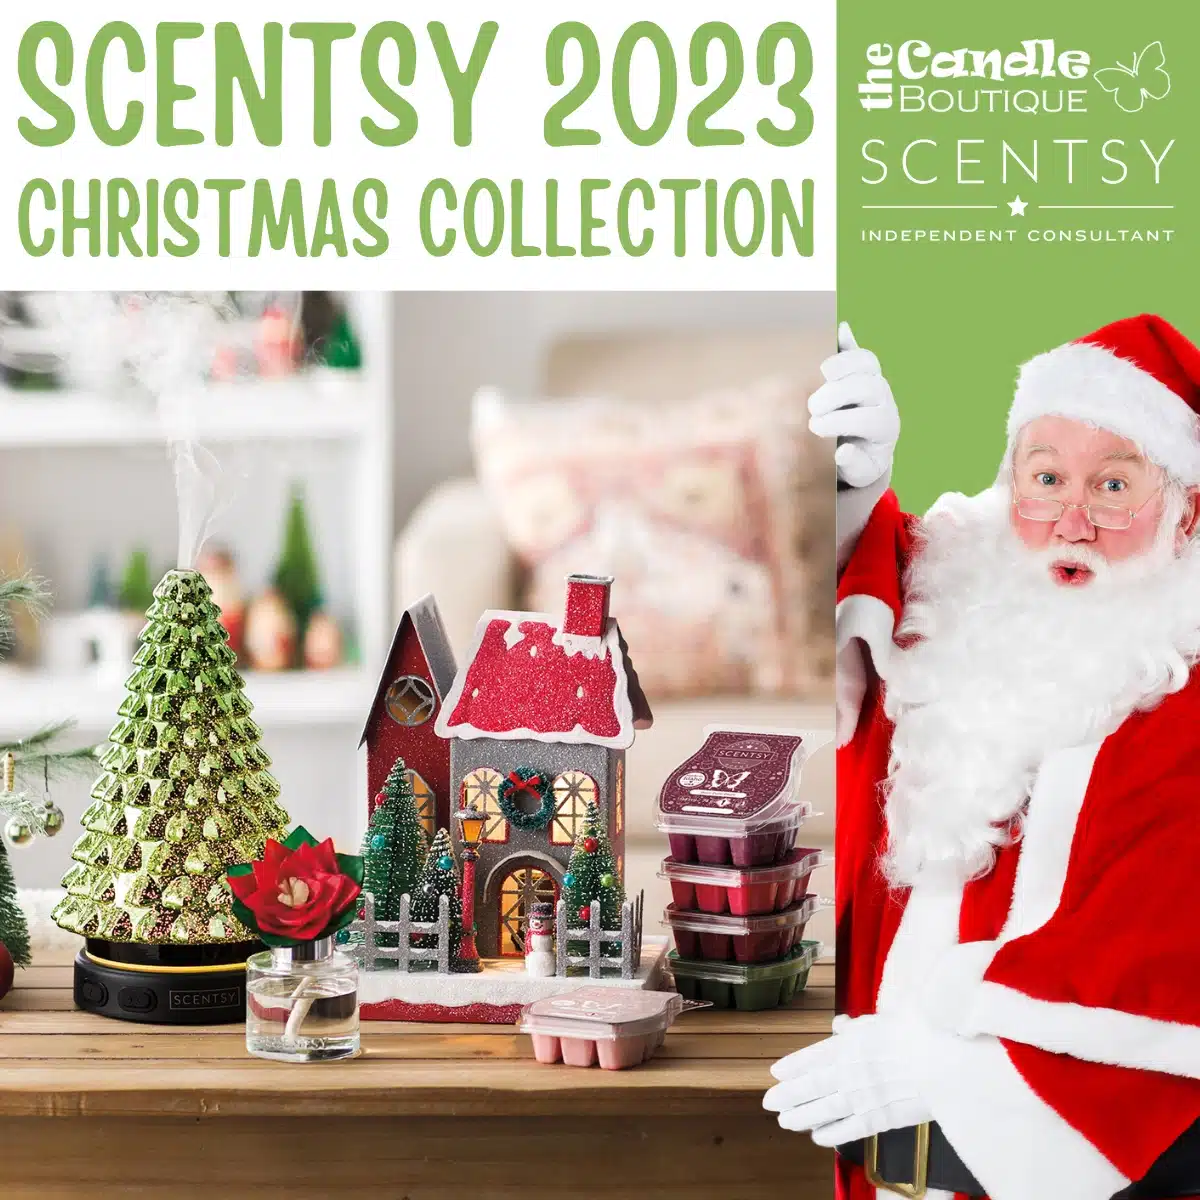 2022: Visit Santa at The Somerset Collection - Luxurious Holiday Photos